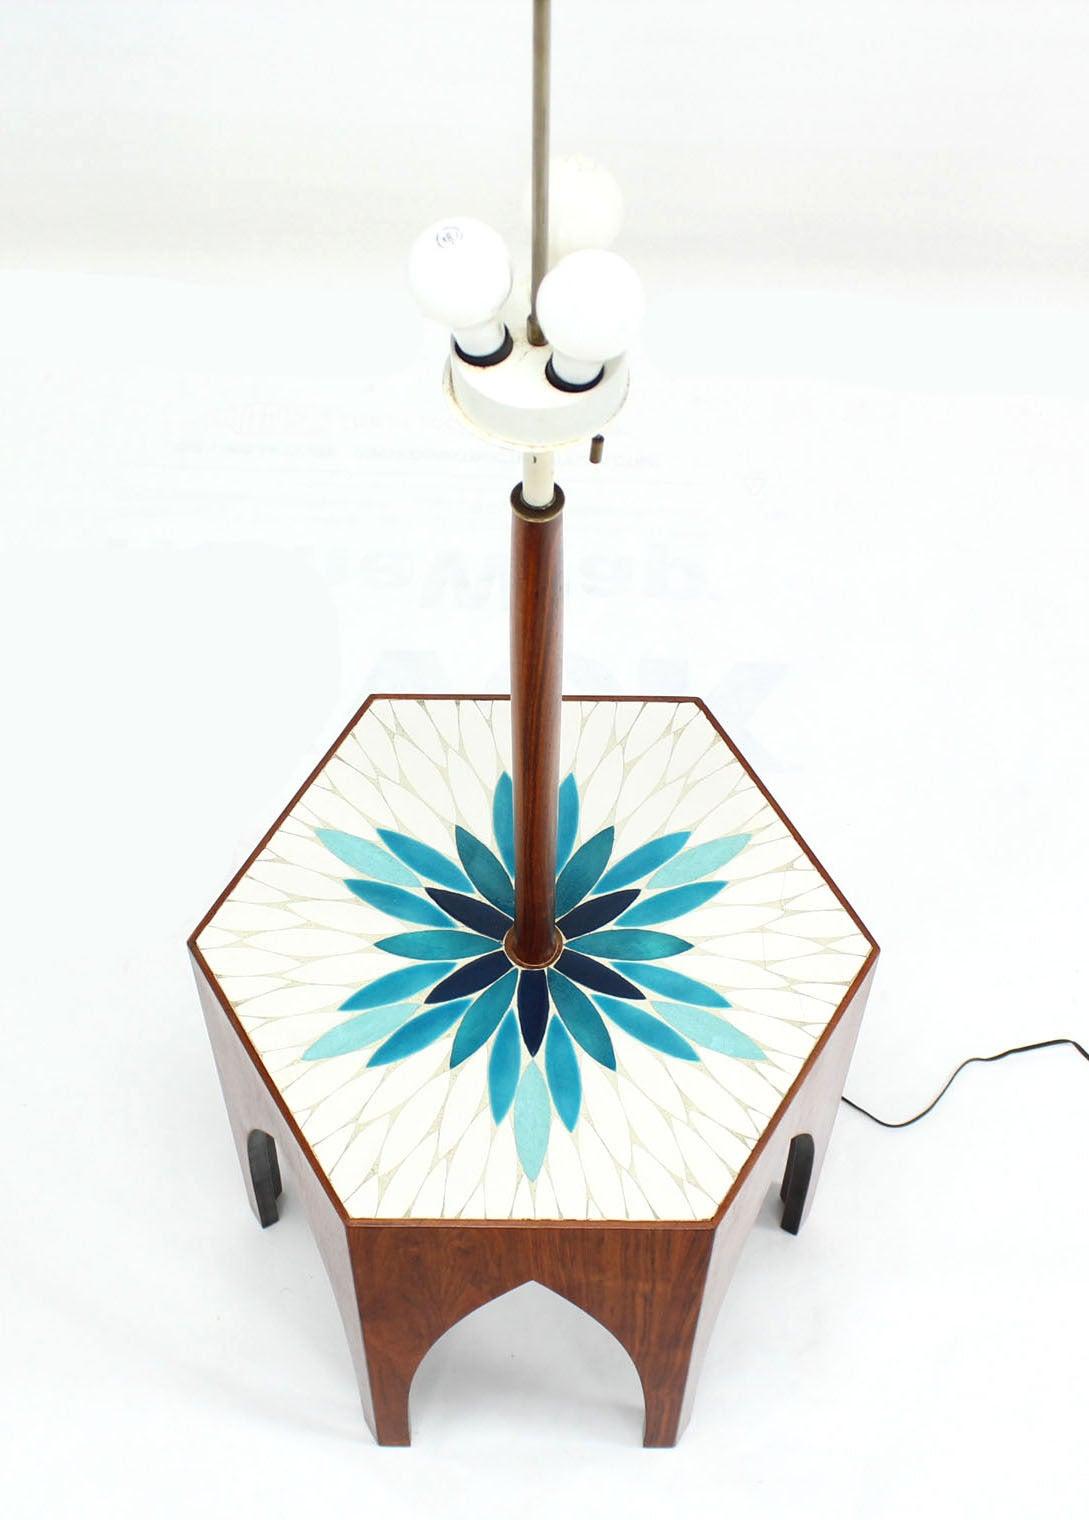 Tile Top Oiled Walnut Base Floor Lamp Integrated Side Table Harvey Probber MINT!